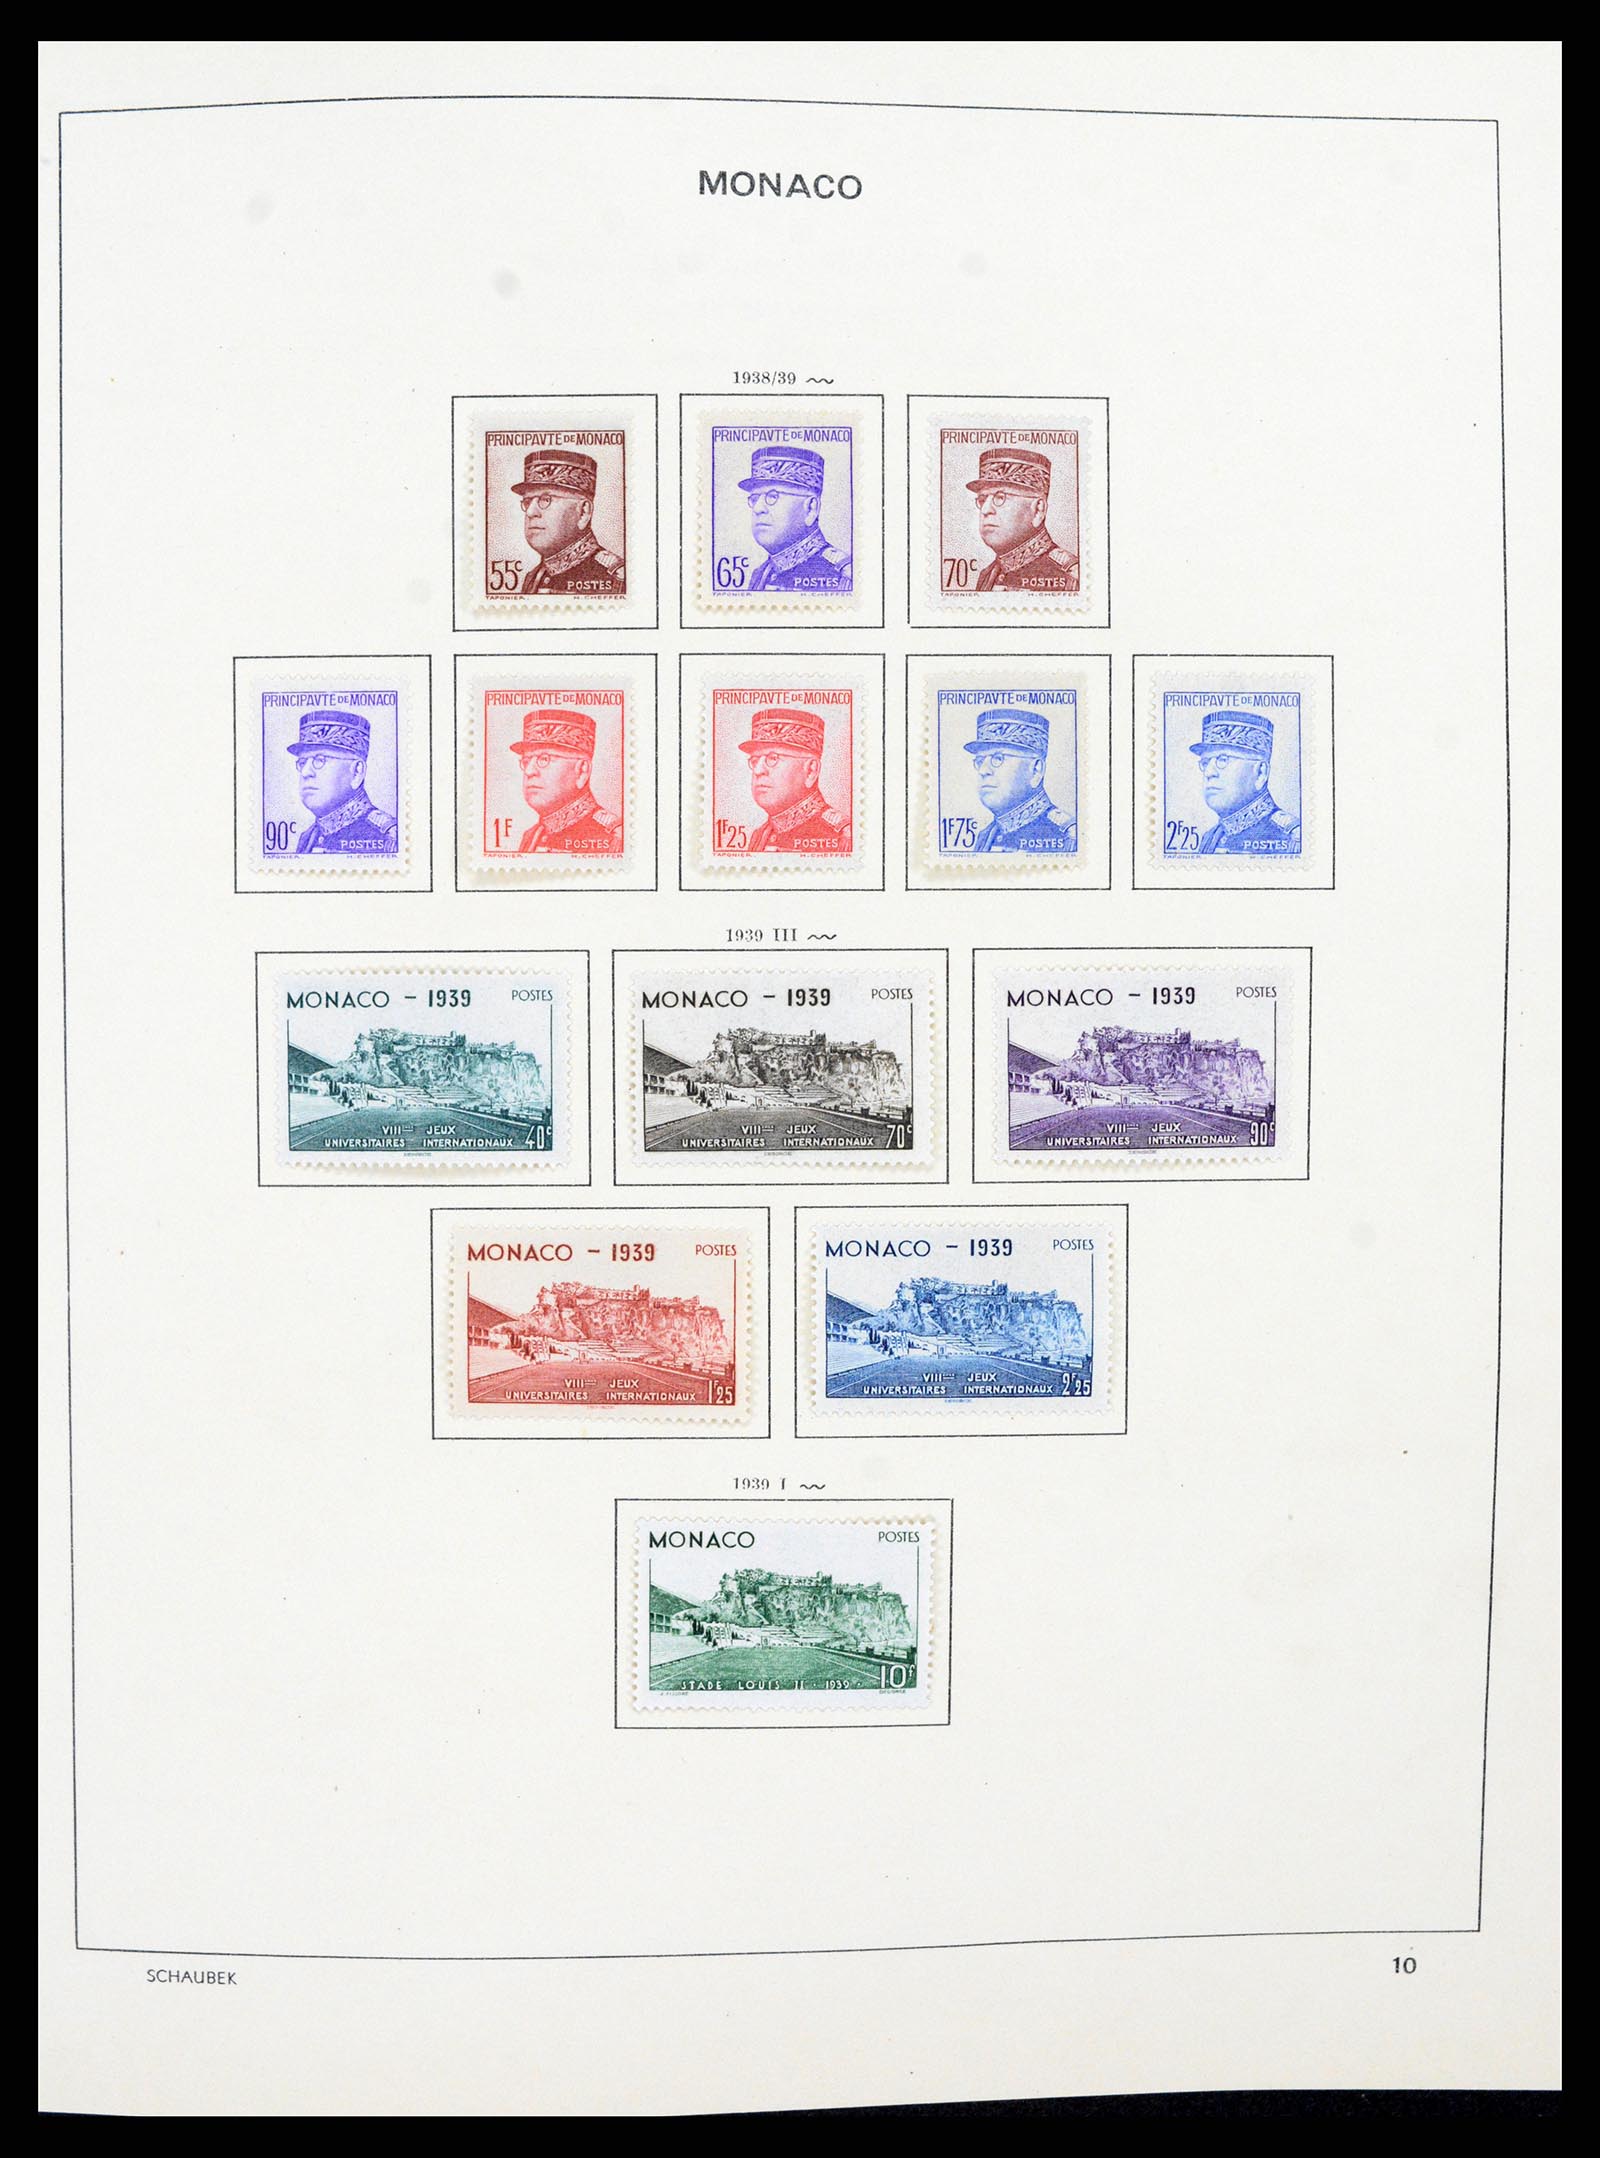 37570 010 - Stamp collection 37570 Monaco 1885-2013.